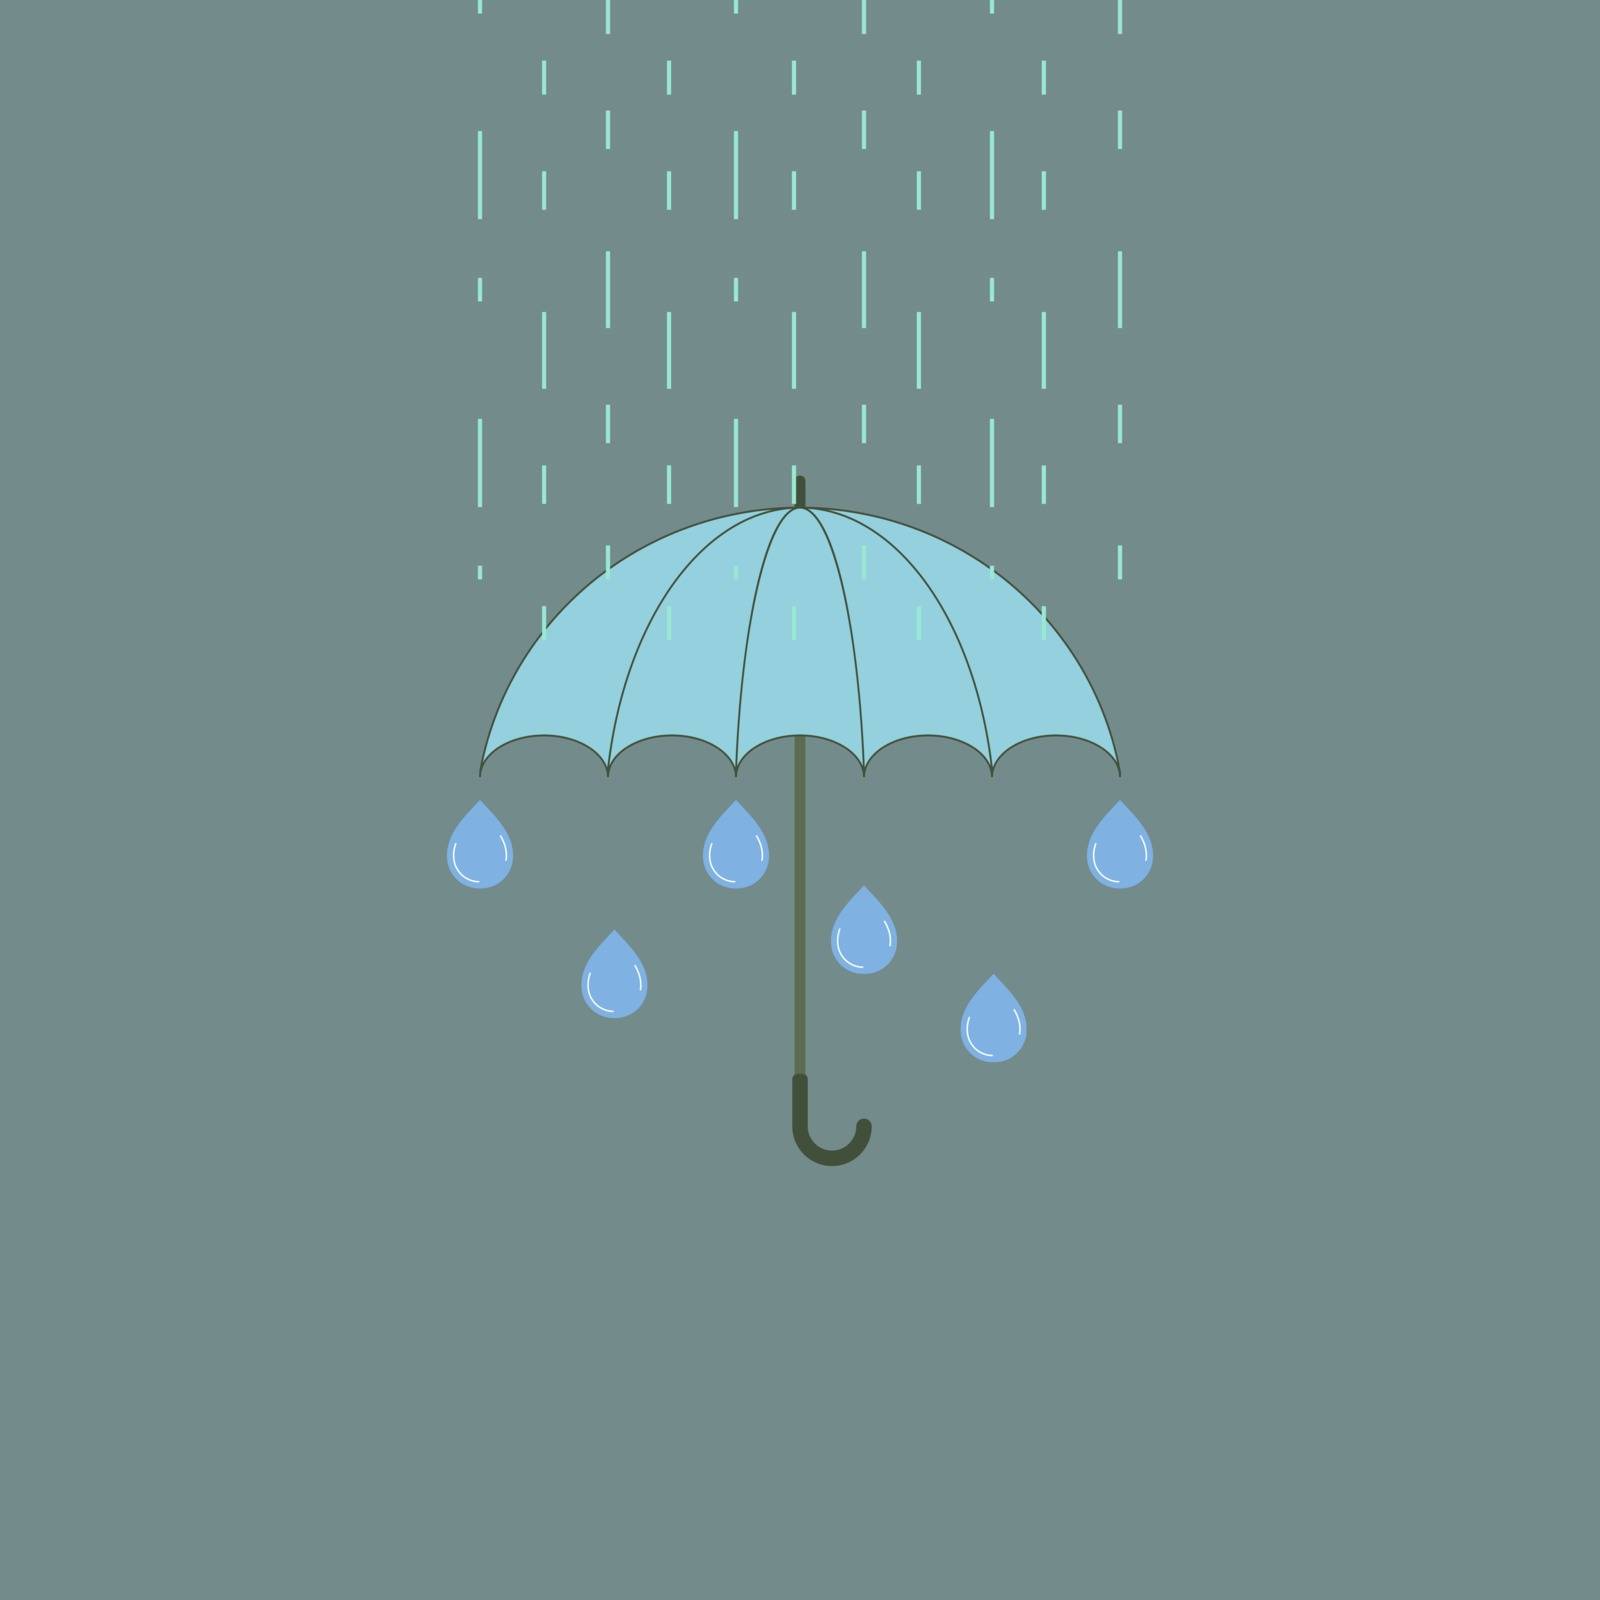 Rainfall, umbrella and water drop represent rainy season. Weather icon,sign,symbol. Vector illustration.